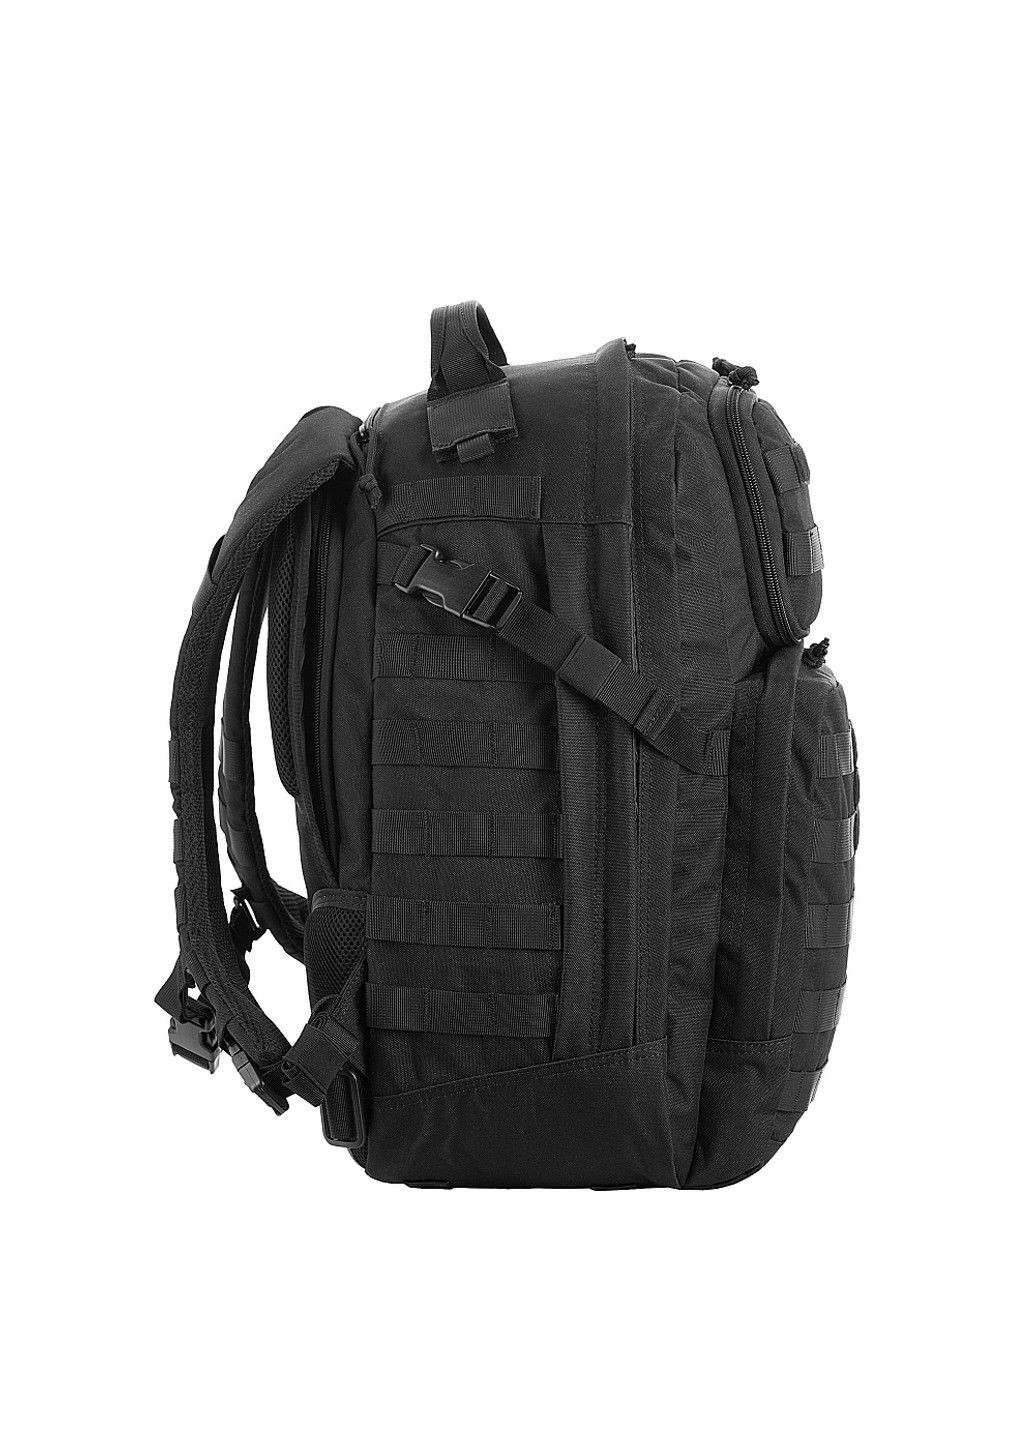 Влагозащищенный Рюкзак 34 л / Ранец "PATHFINDER PACK" размер 50 х 40 х 25 см M-TAC (293269516)